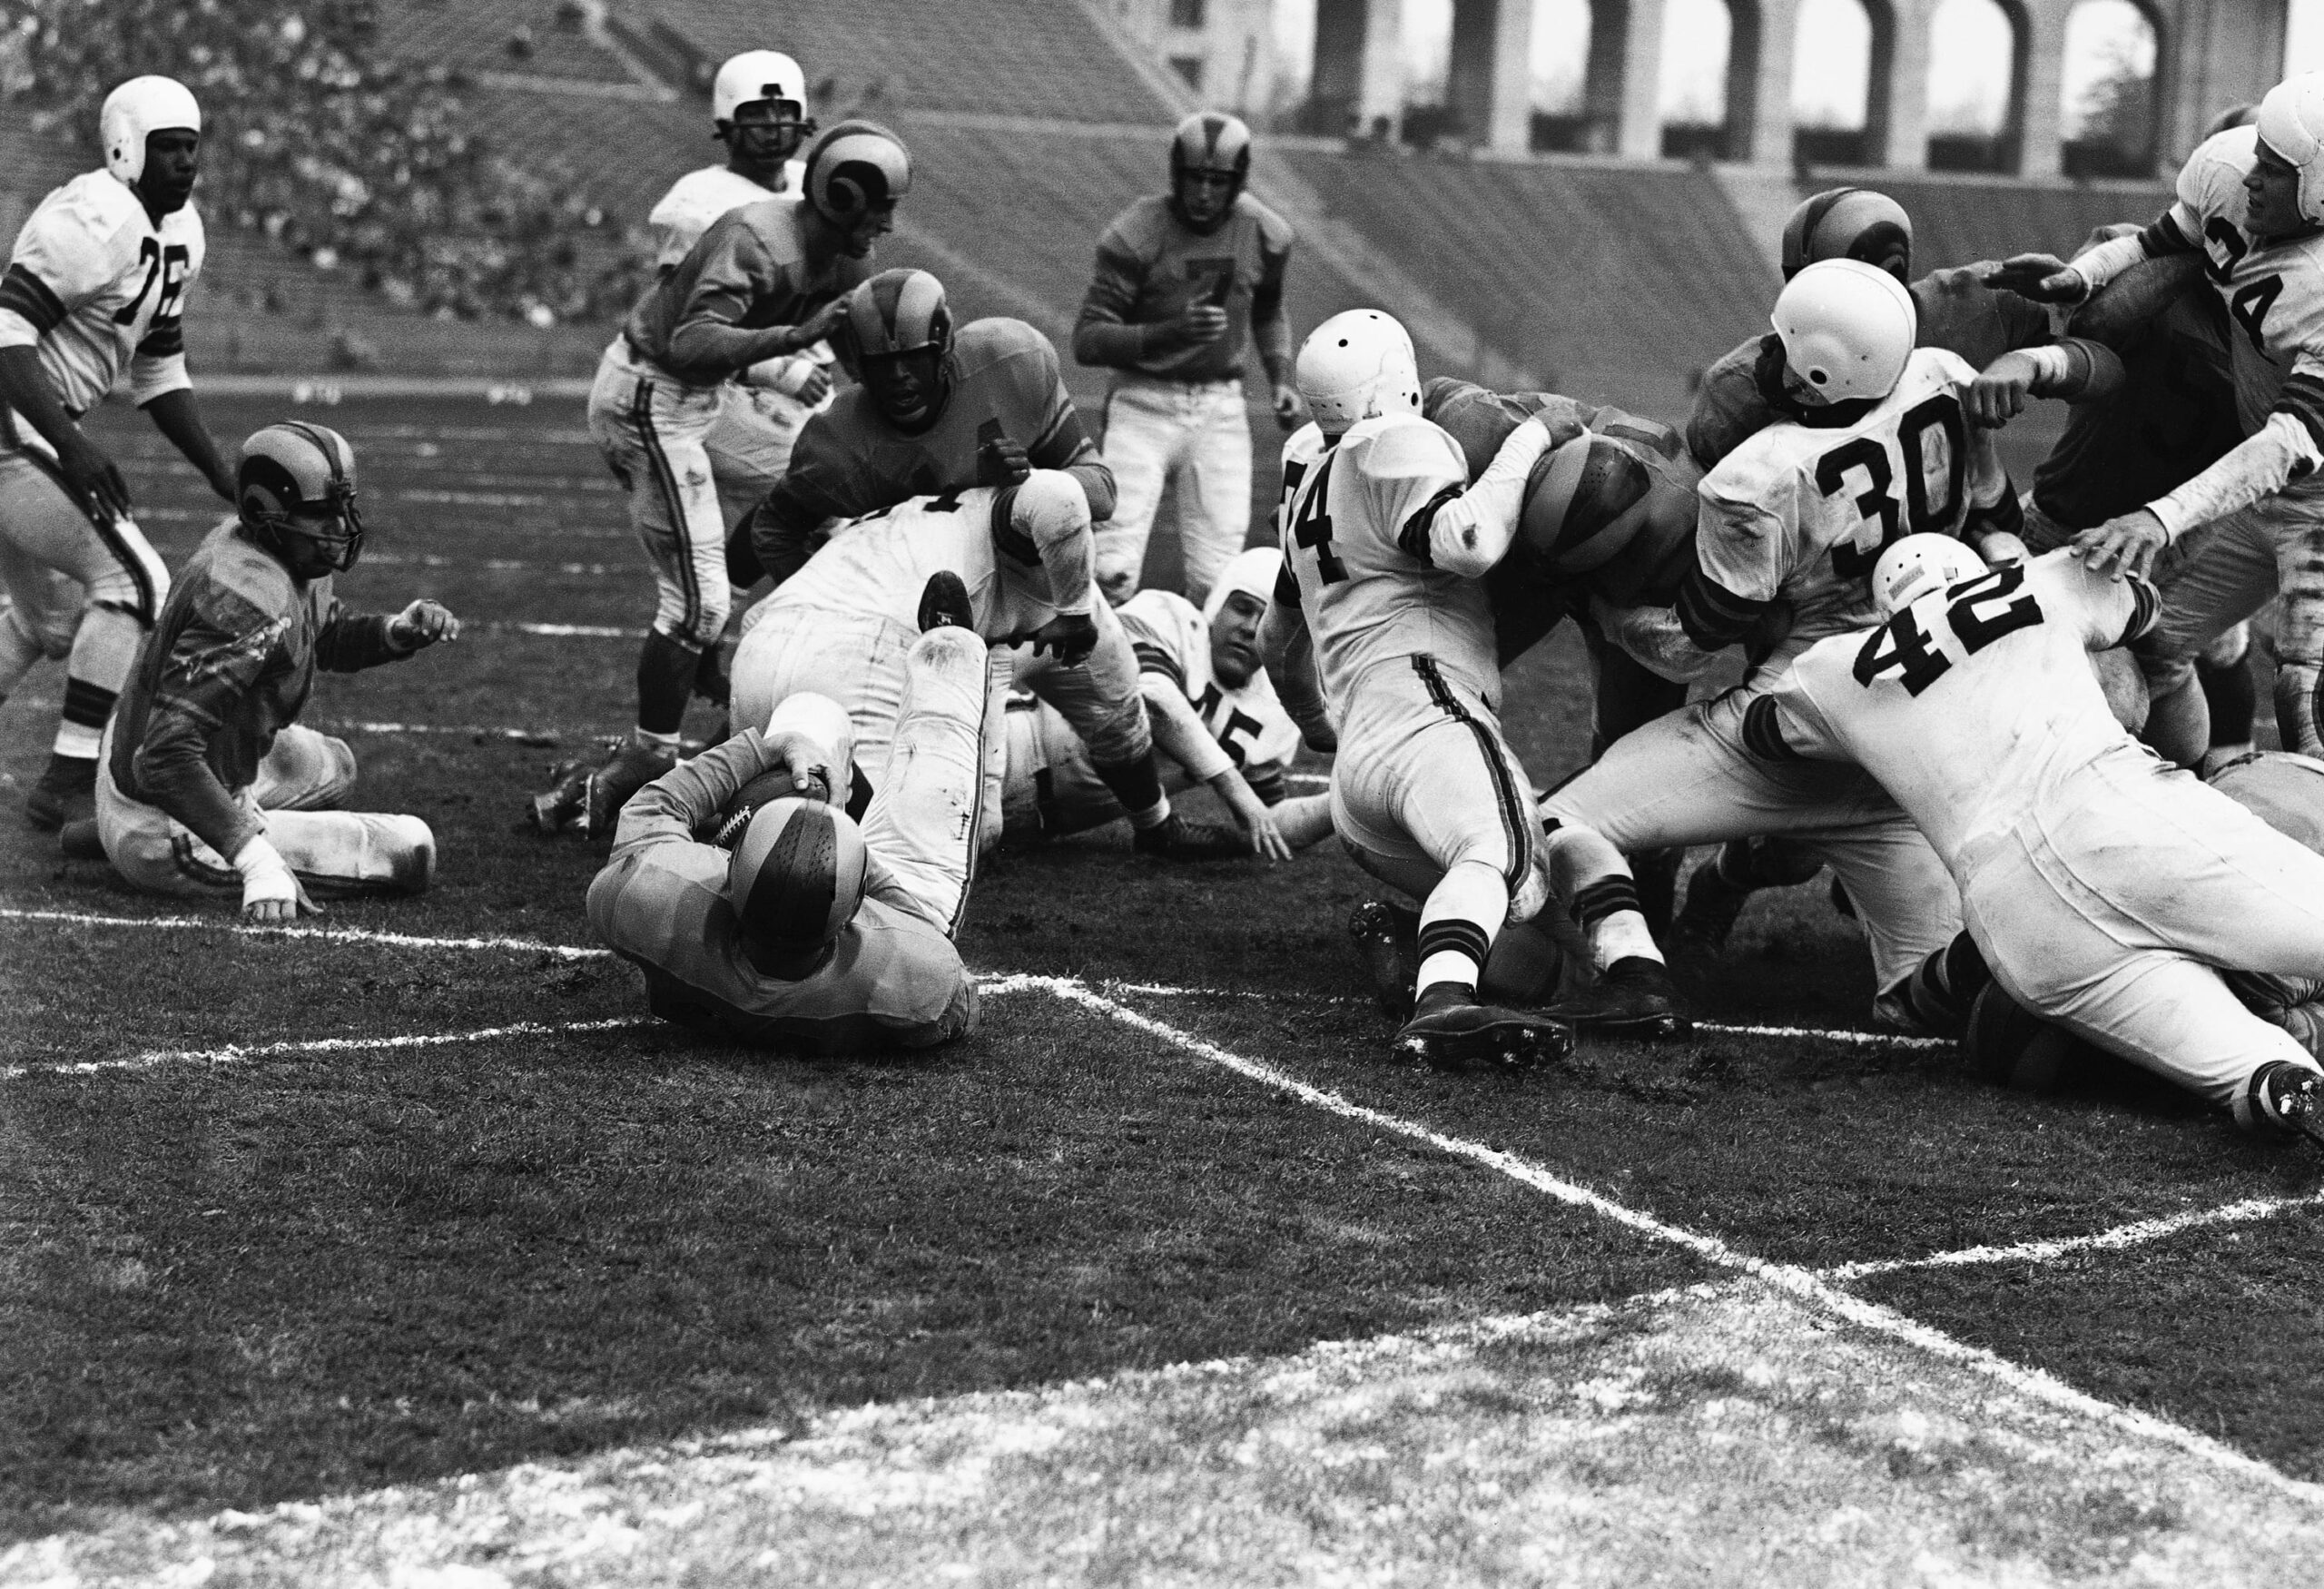 The history behind 8 original NFL teams scaled